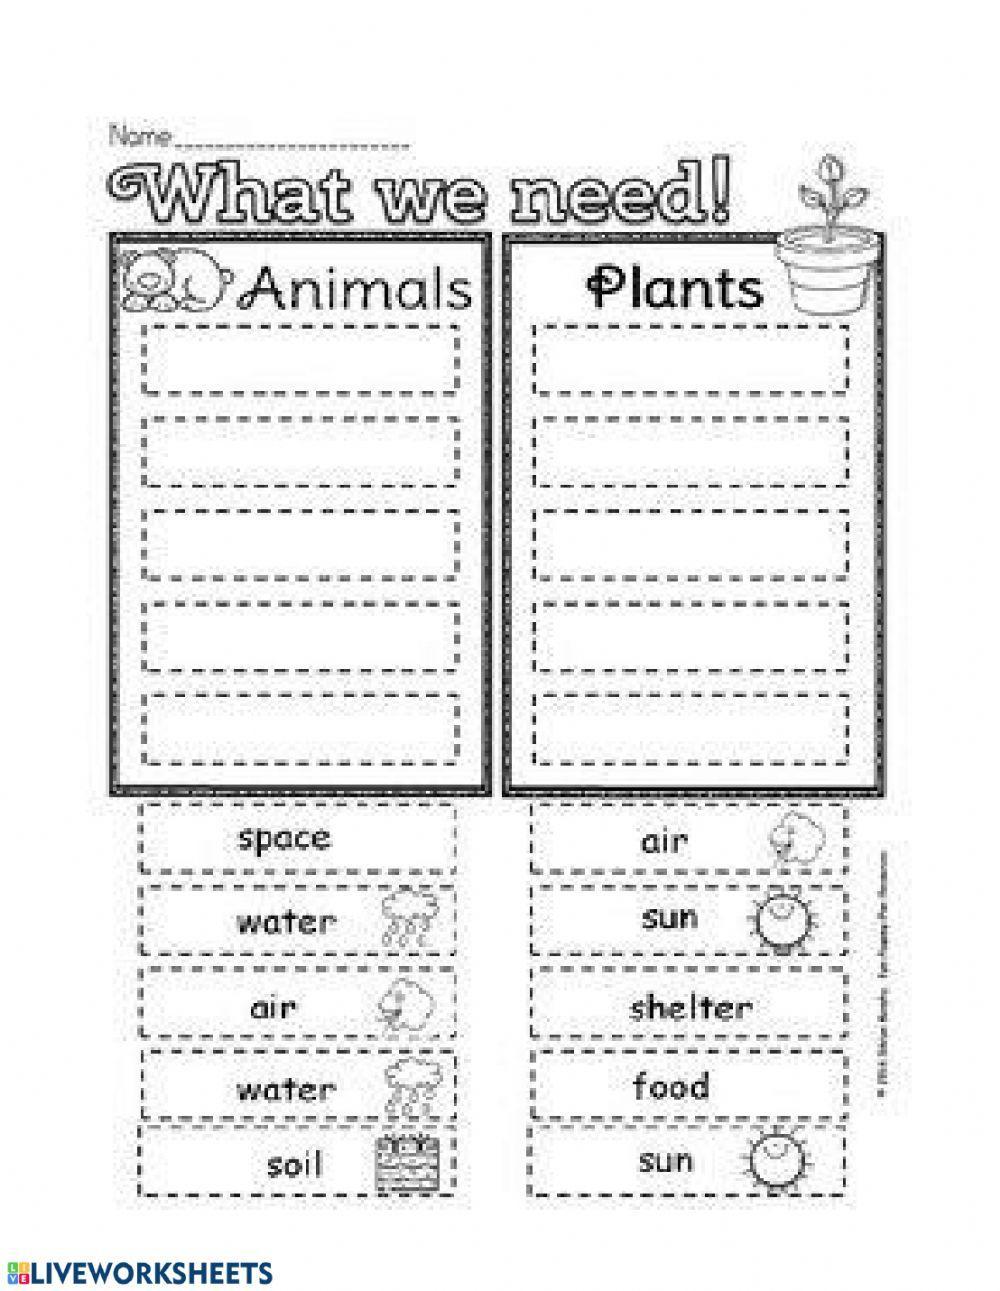 Animal plants and need